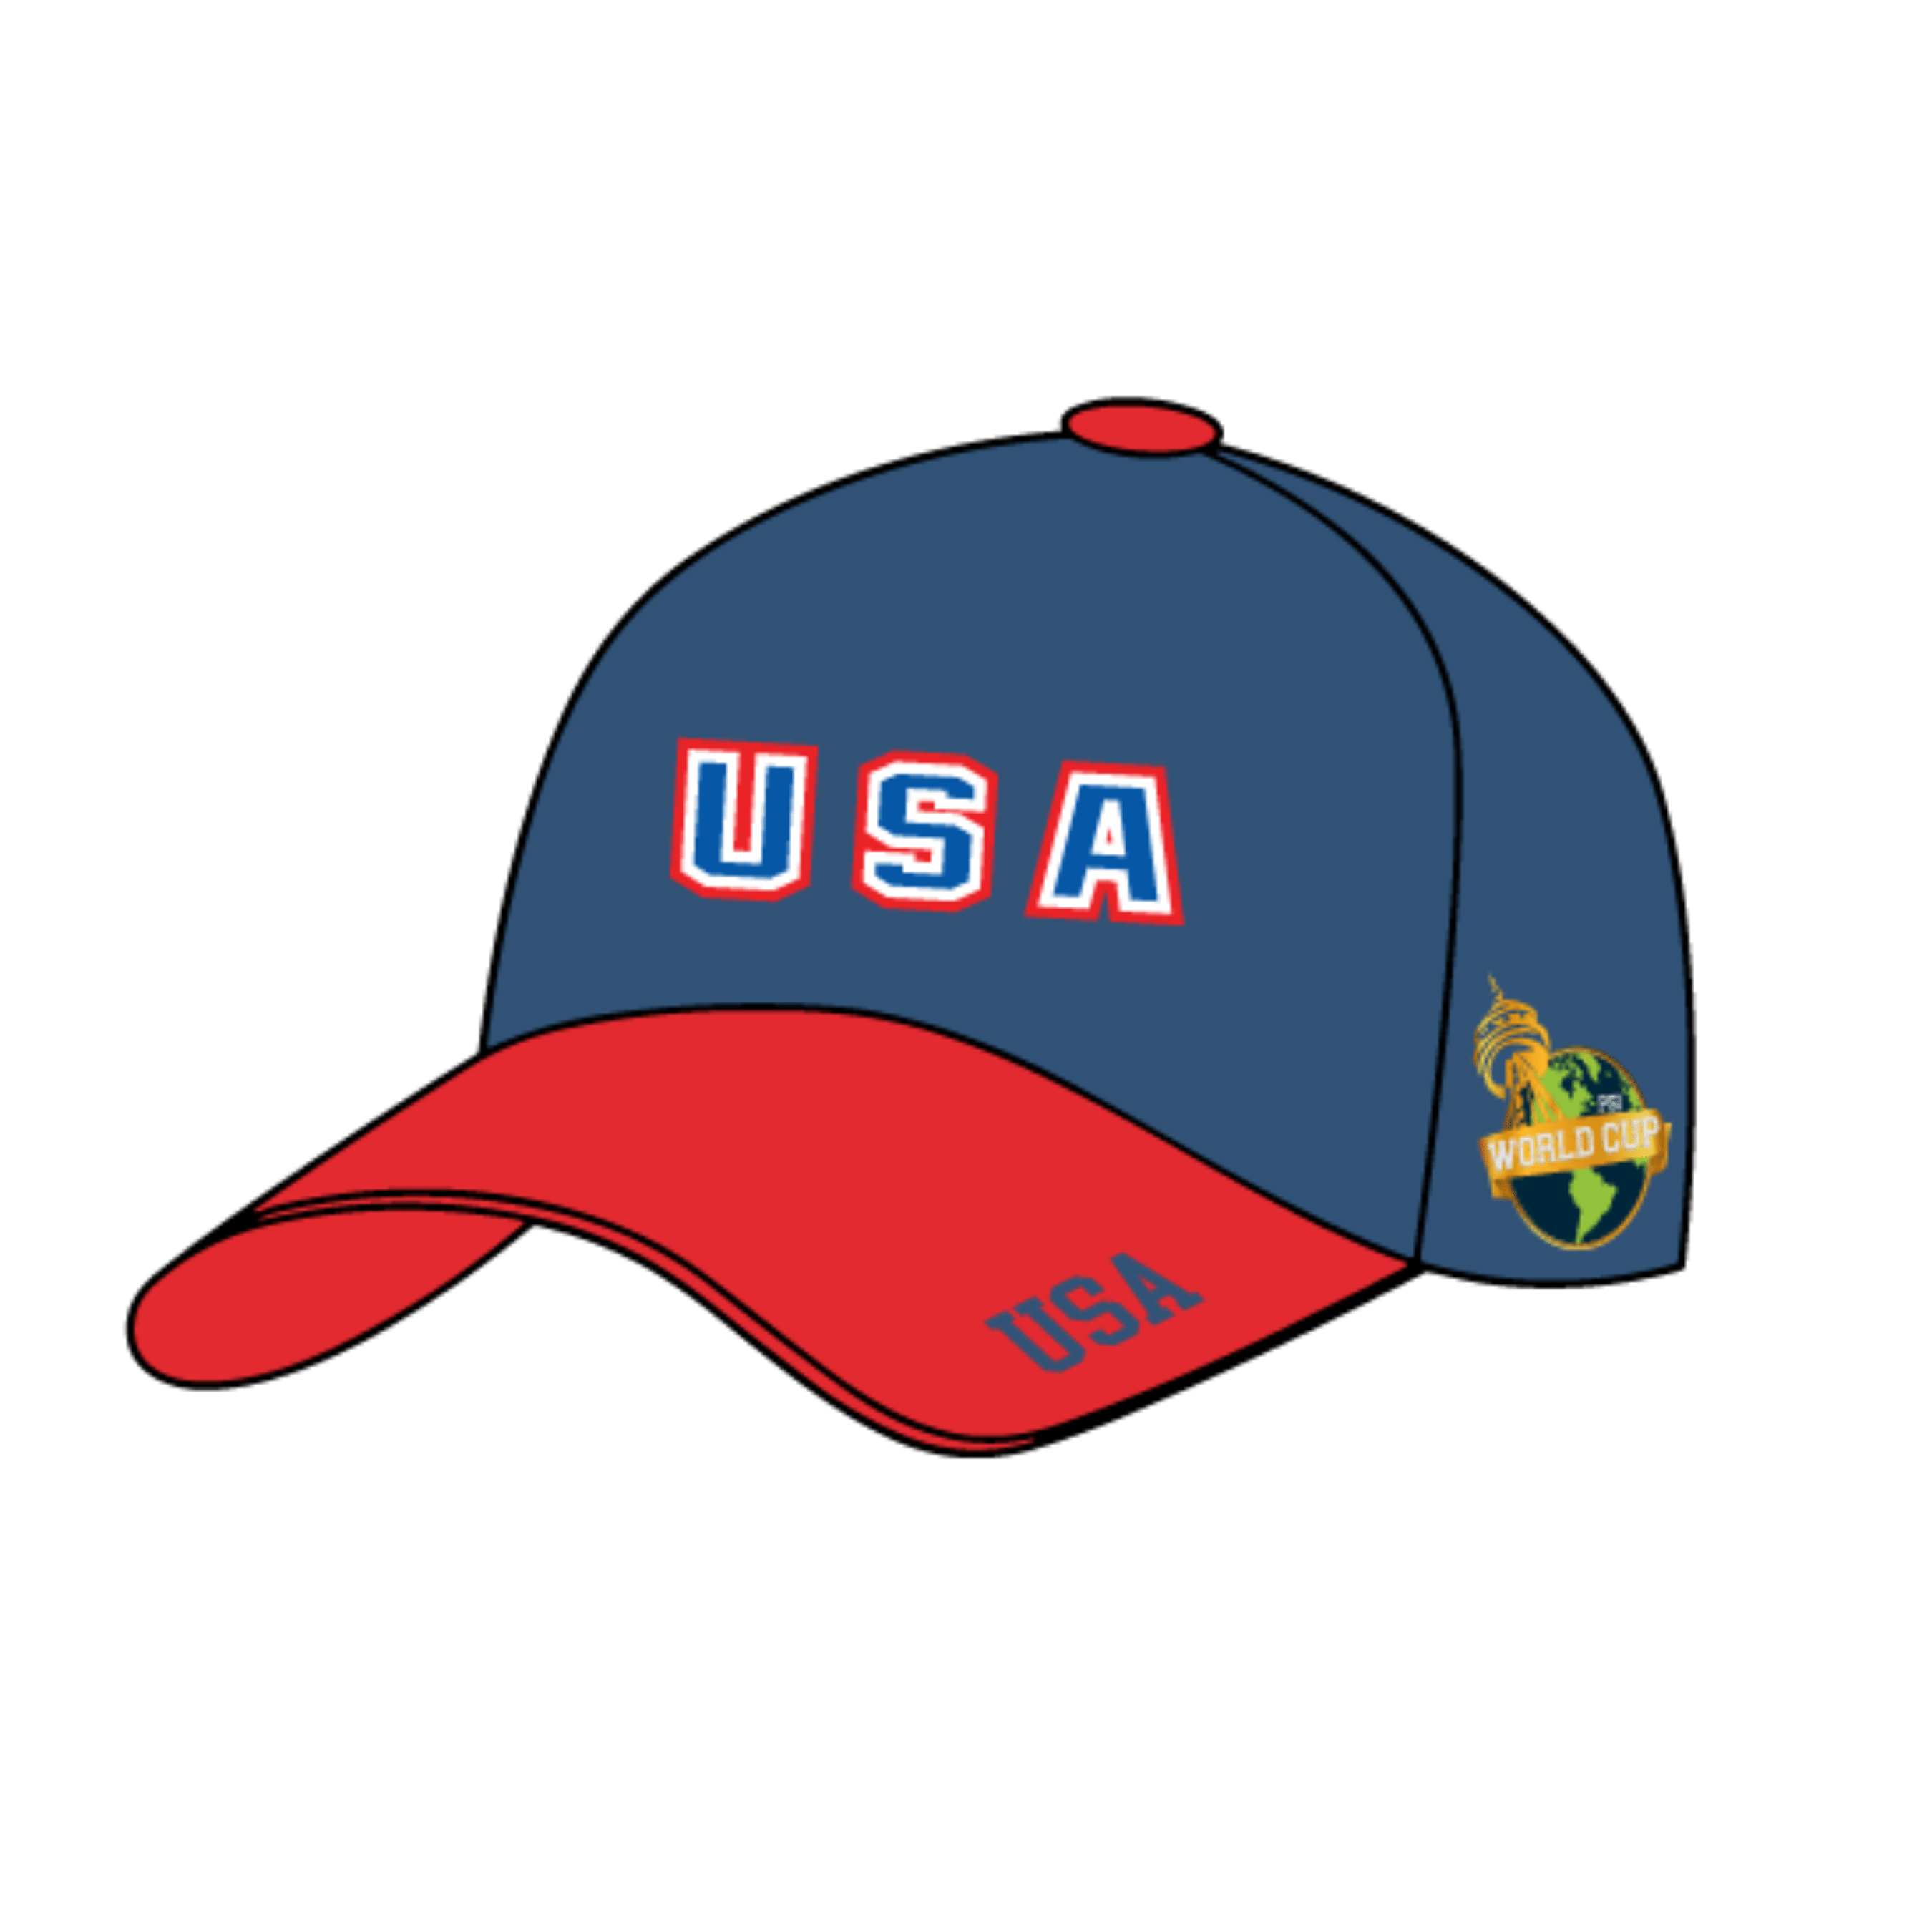 USA West World Cup Gold Bundle